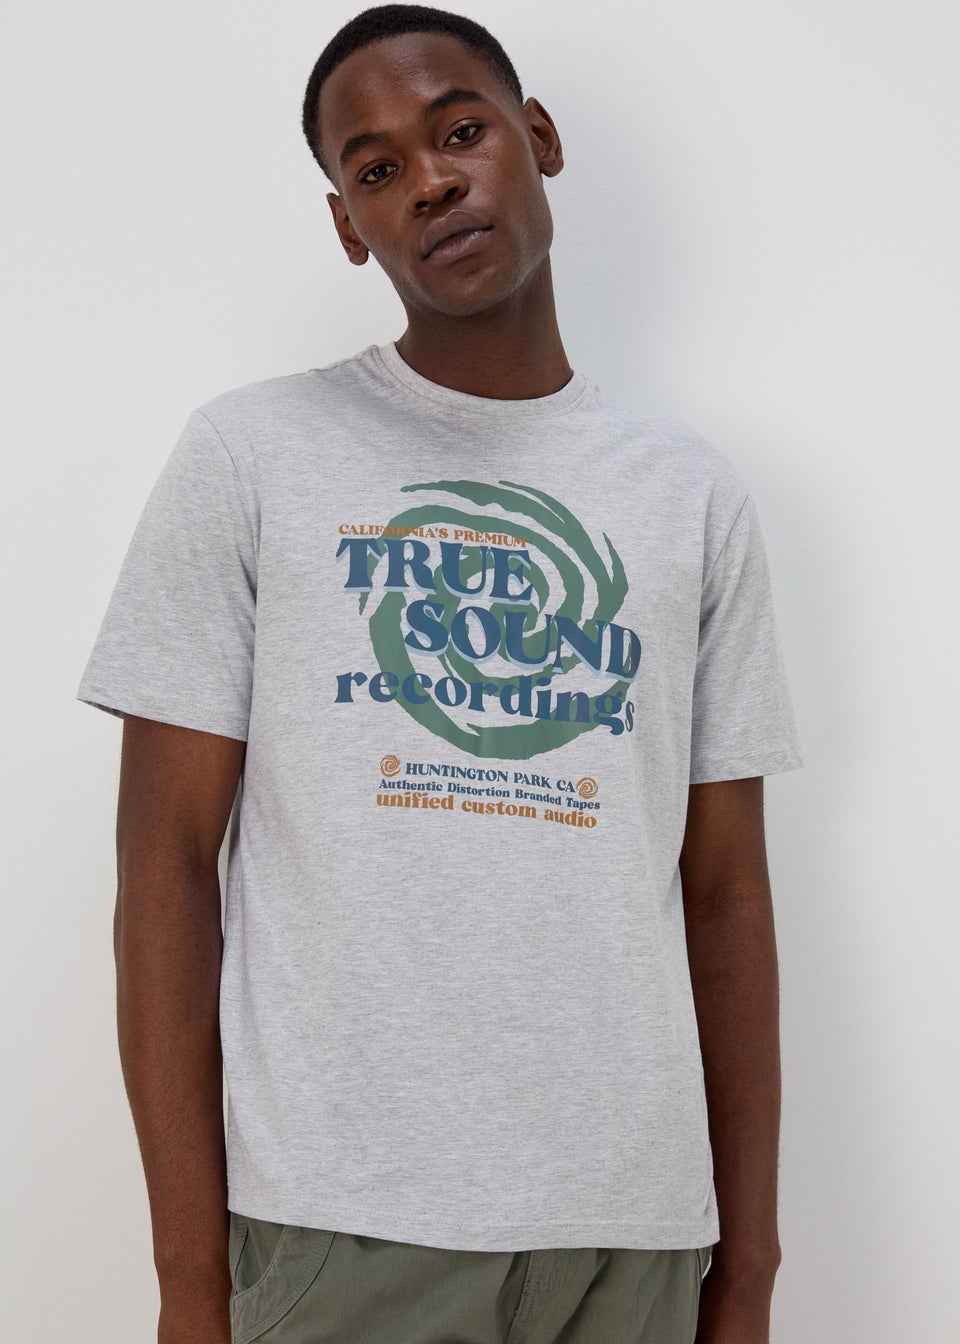 Серая футболка True Sound Recordings Easy цена и фото